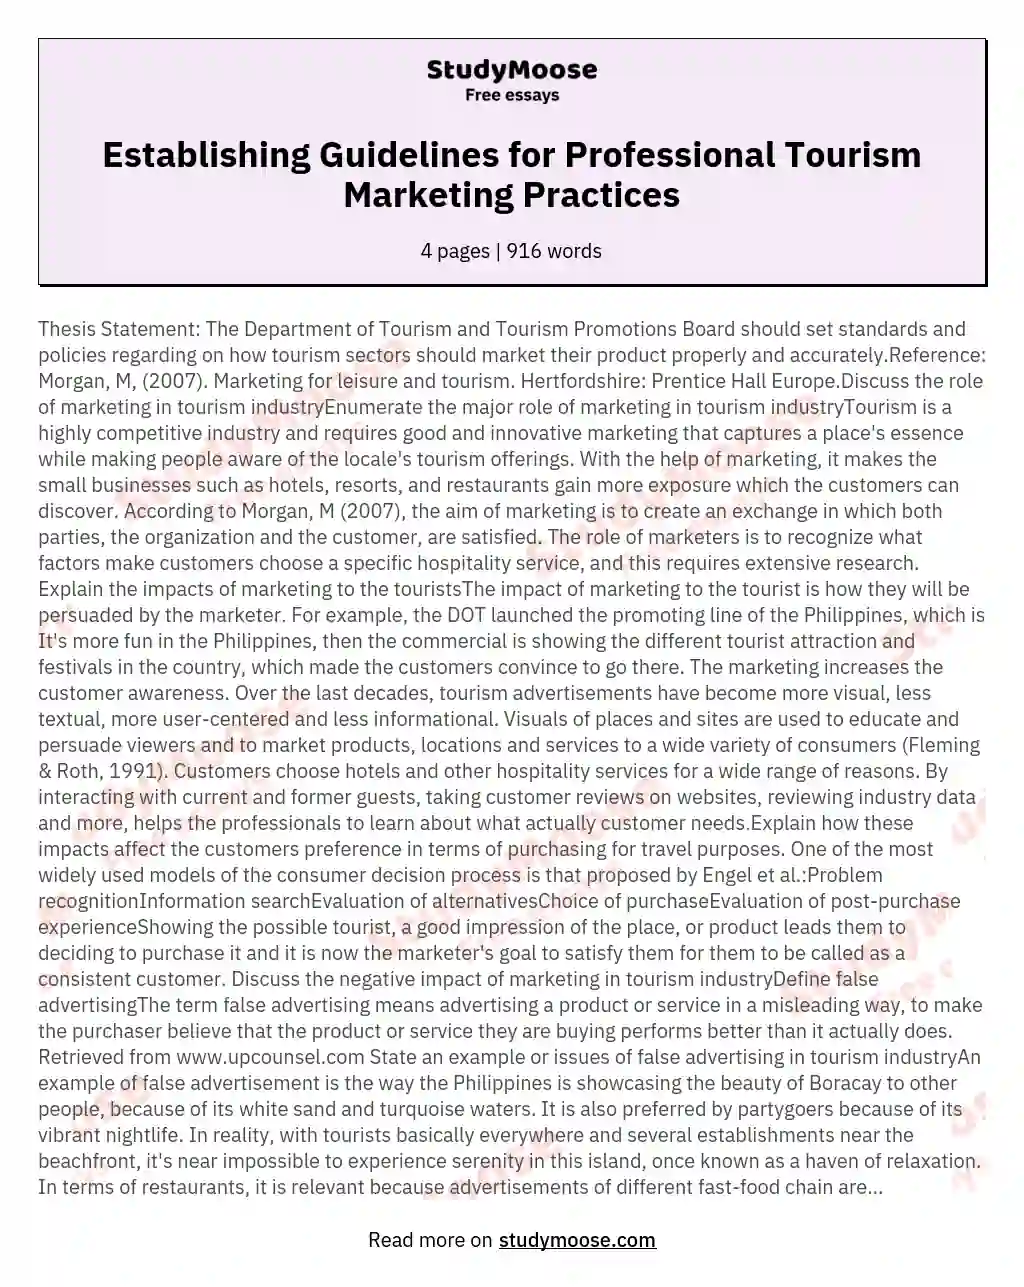 Establishing Guidelines for Professional Tourism Marketing Practices essay